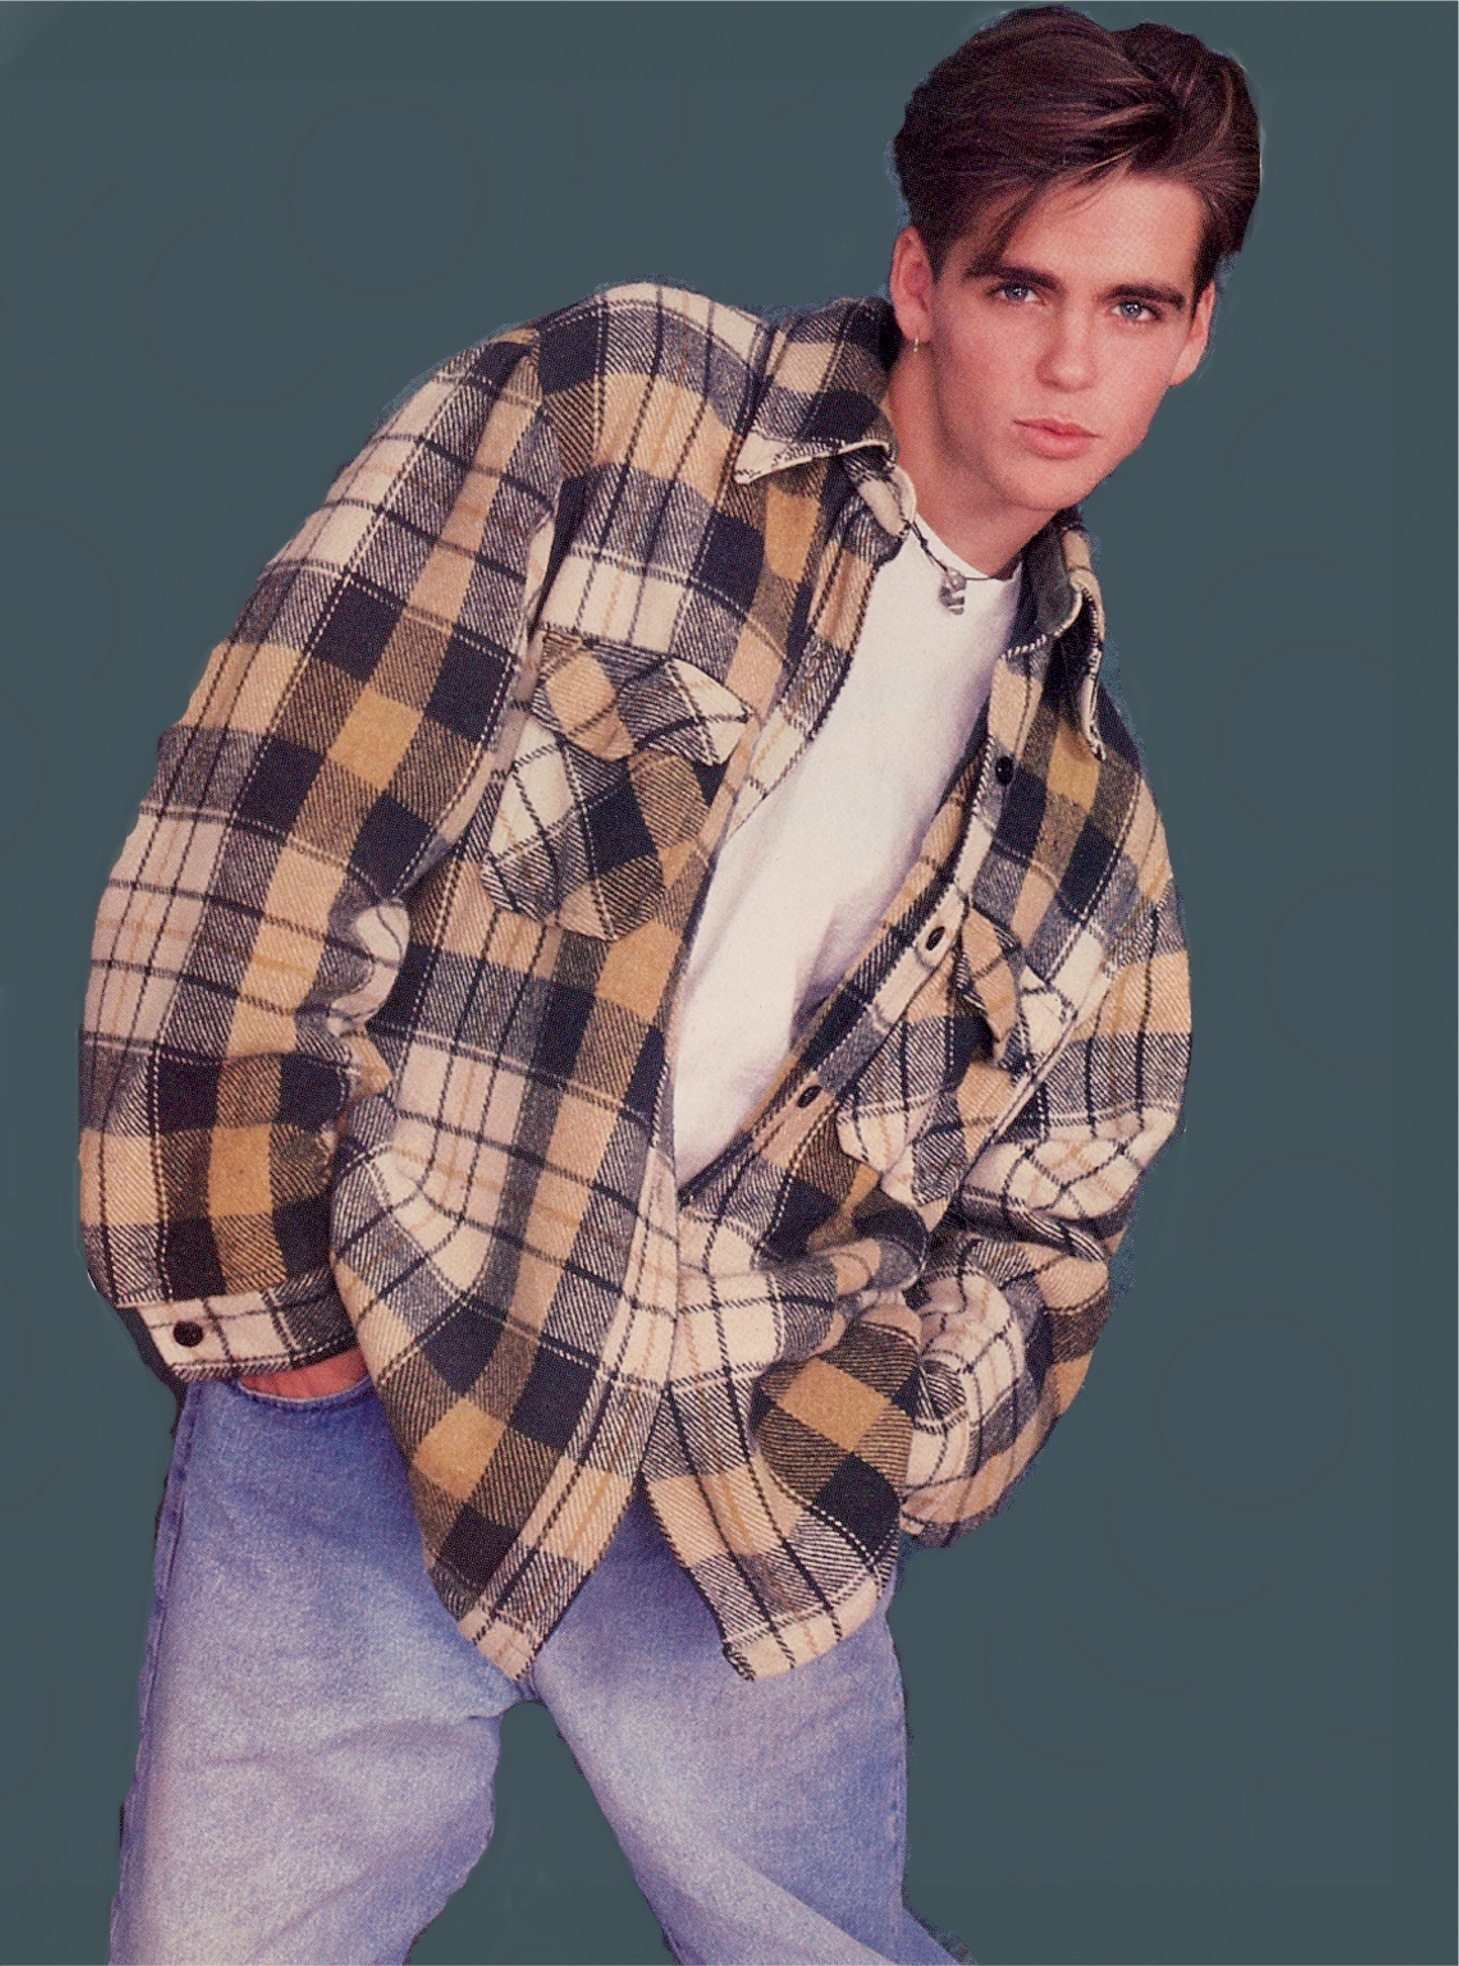 Ретро 2000 года. 80-Е Америка мода мужчины. Шейн МАКДЕРМОТТ. 80е мода Америка мужская. Америка 80е стиль мужской.